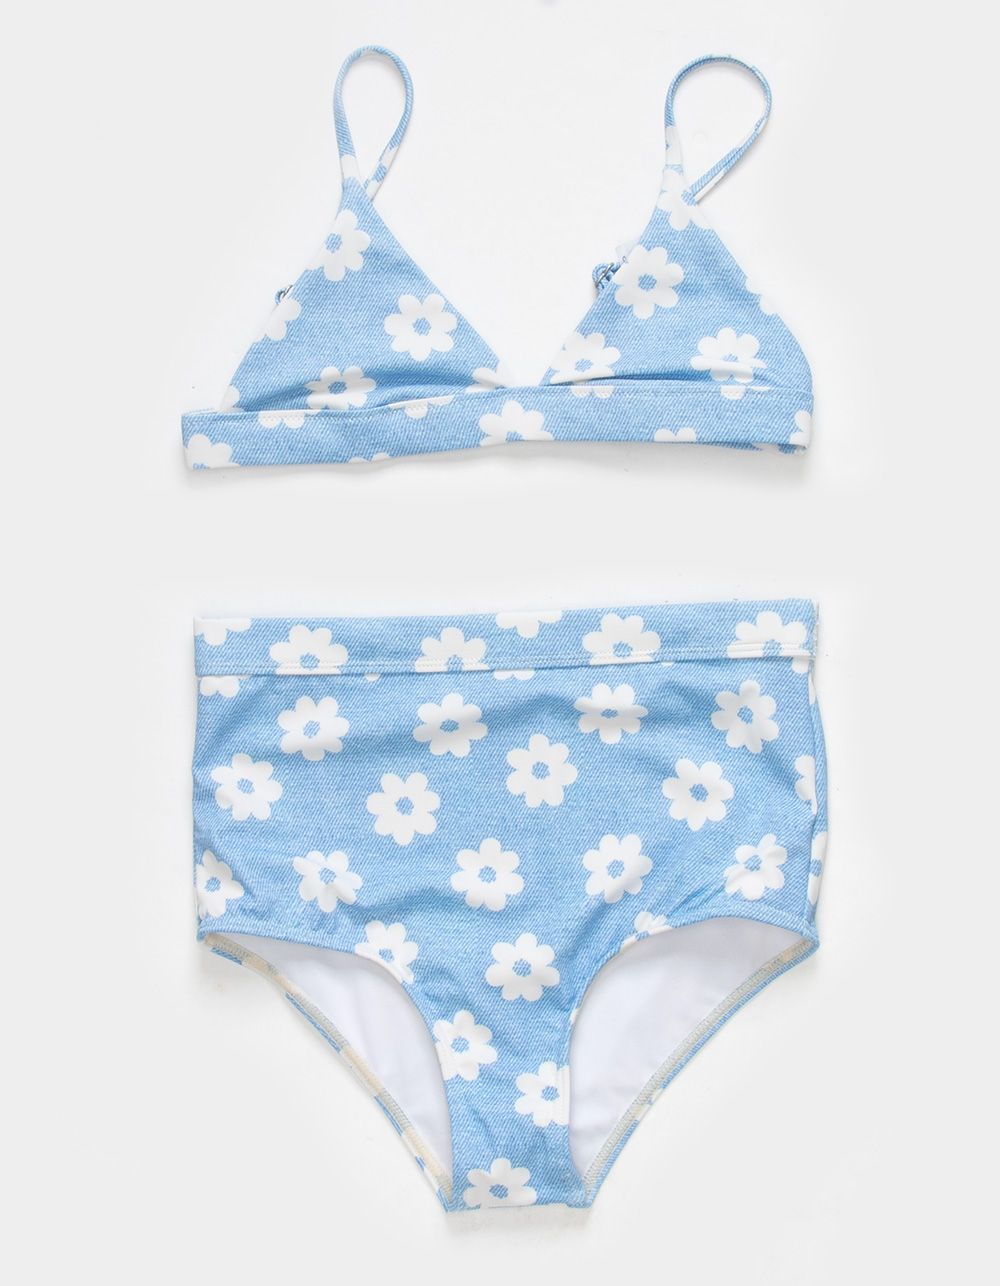 BILLABONG Daisy Dreamz Girls Reversible Bikini Set | Tillys